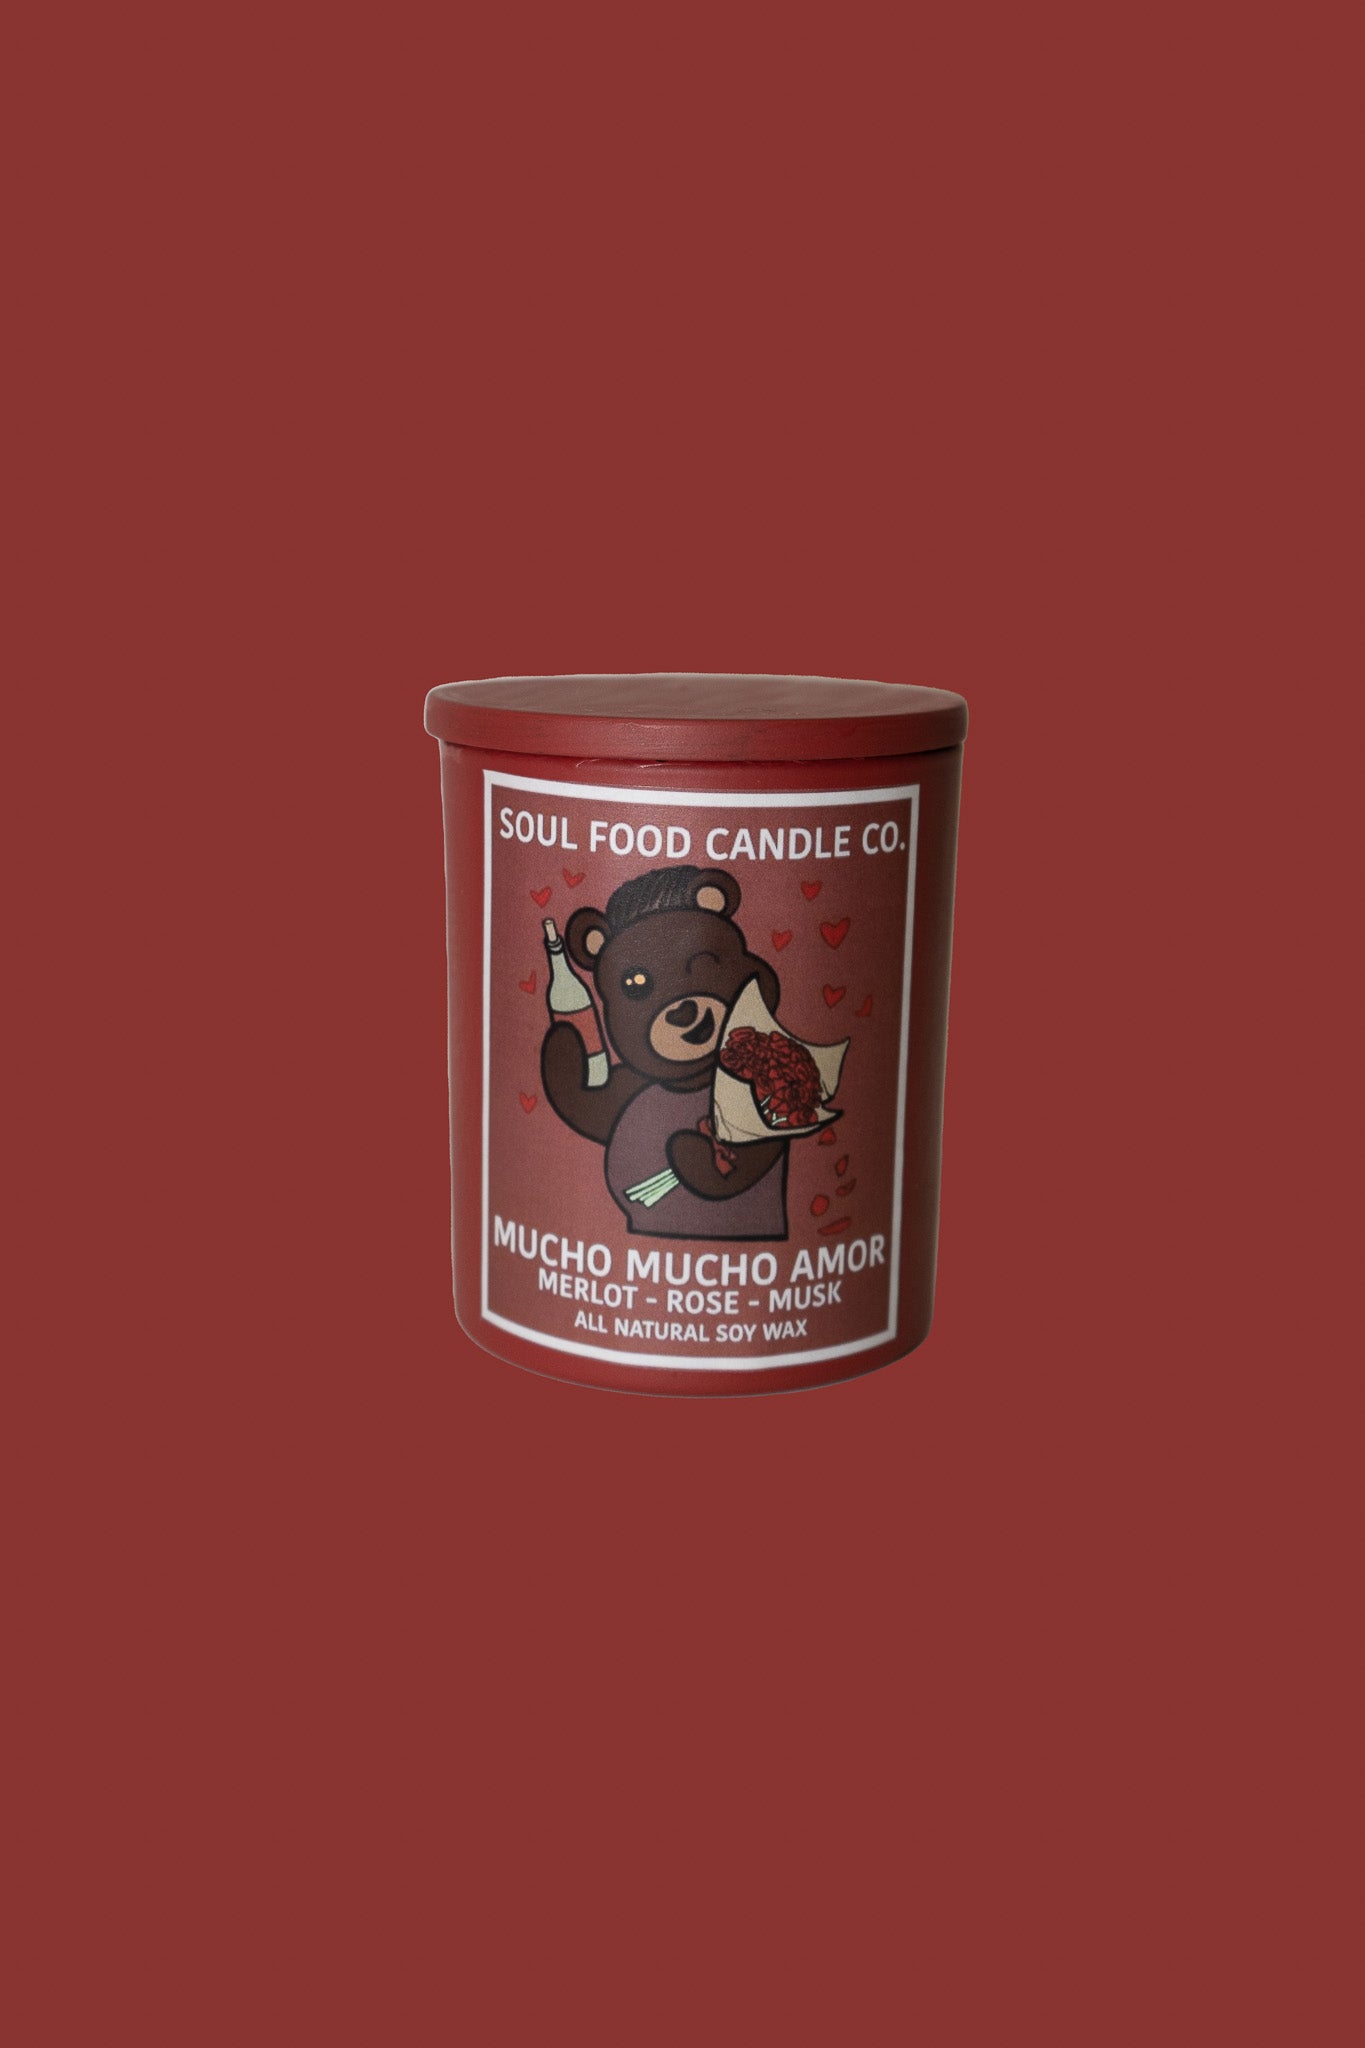 Mucho Mucho Amor - Soul Food Candle Company